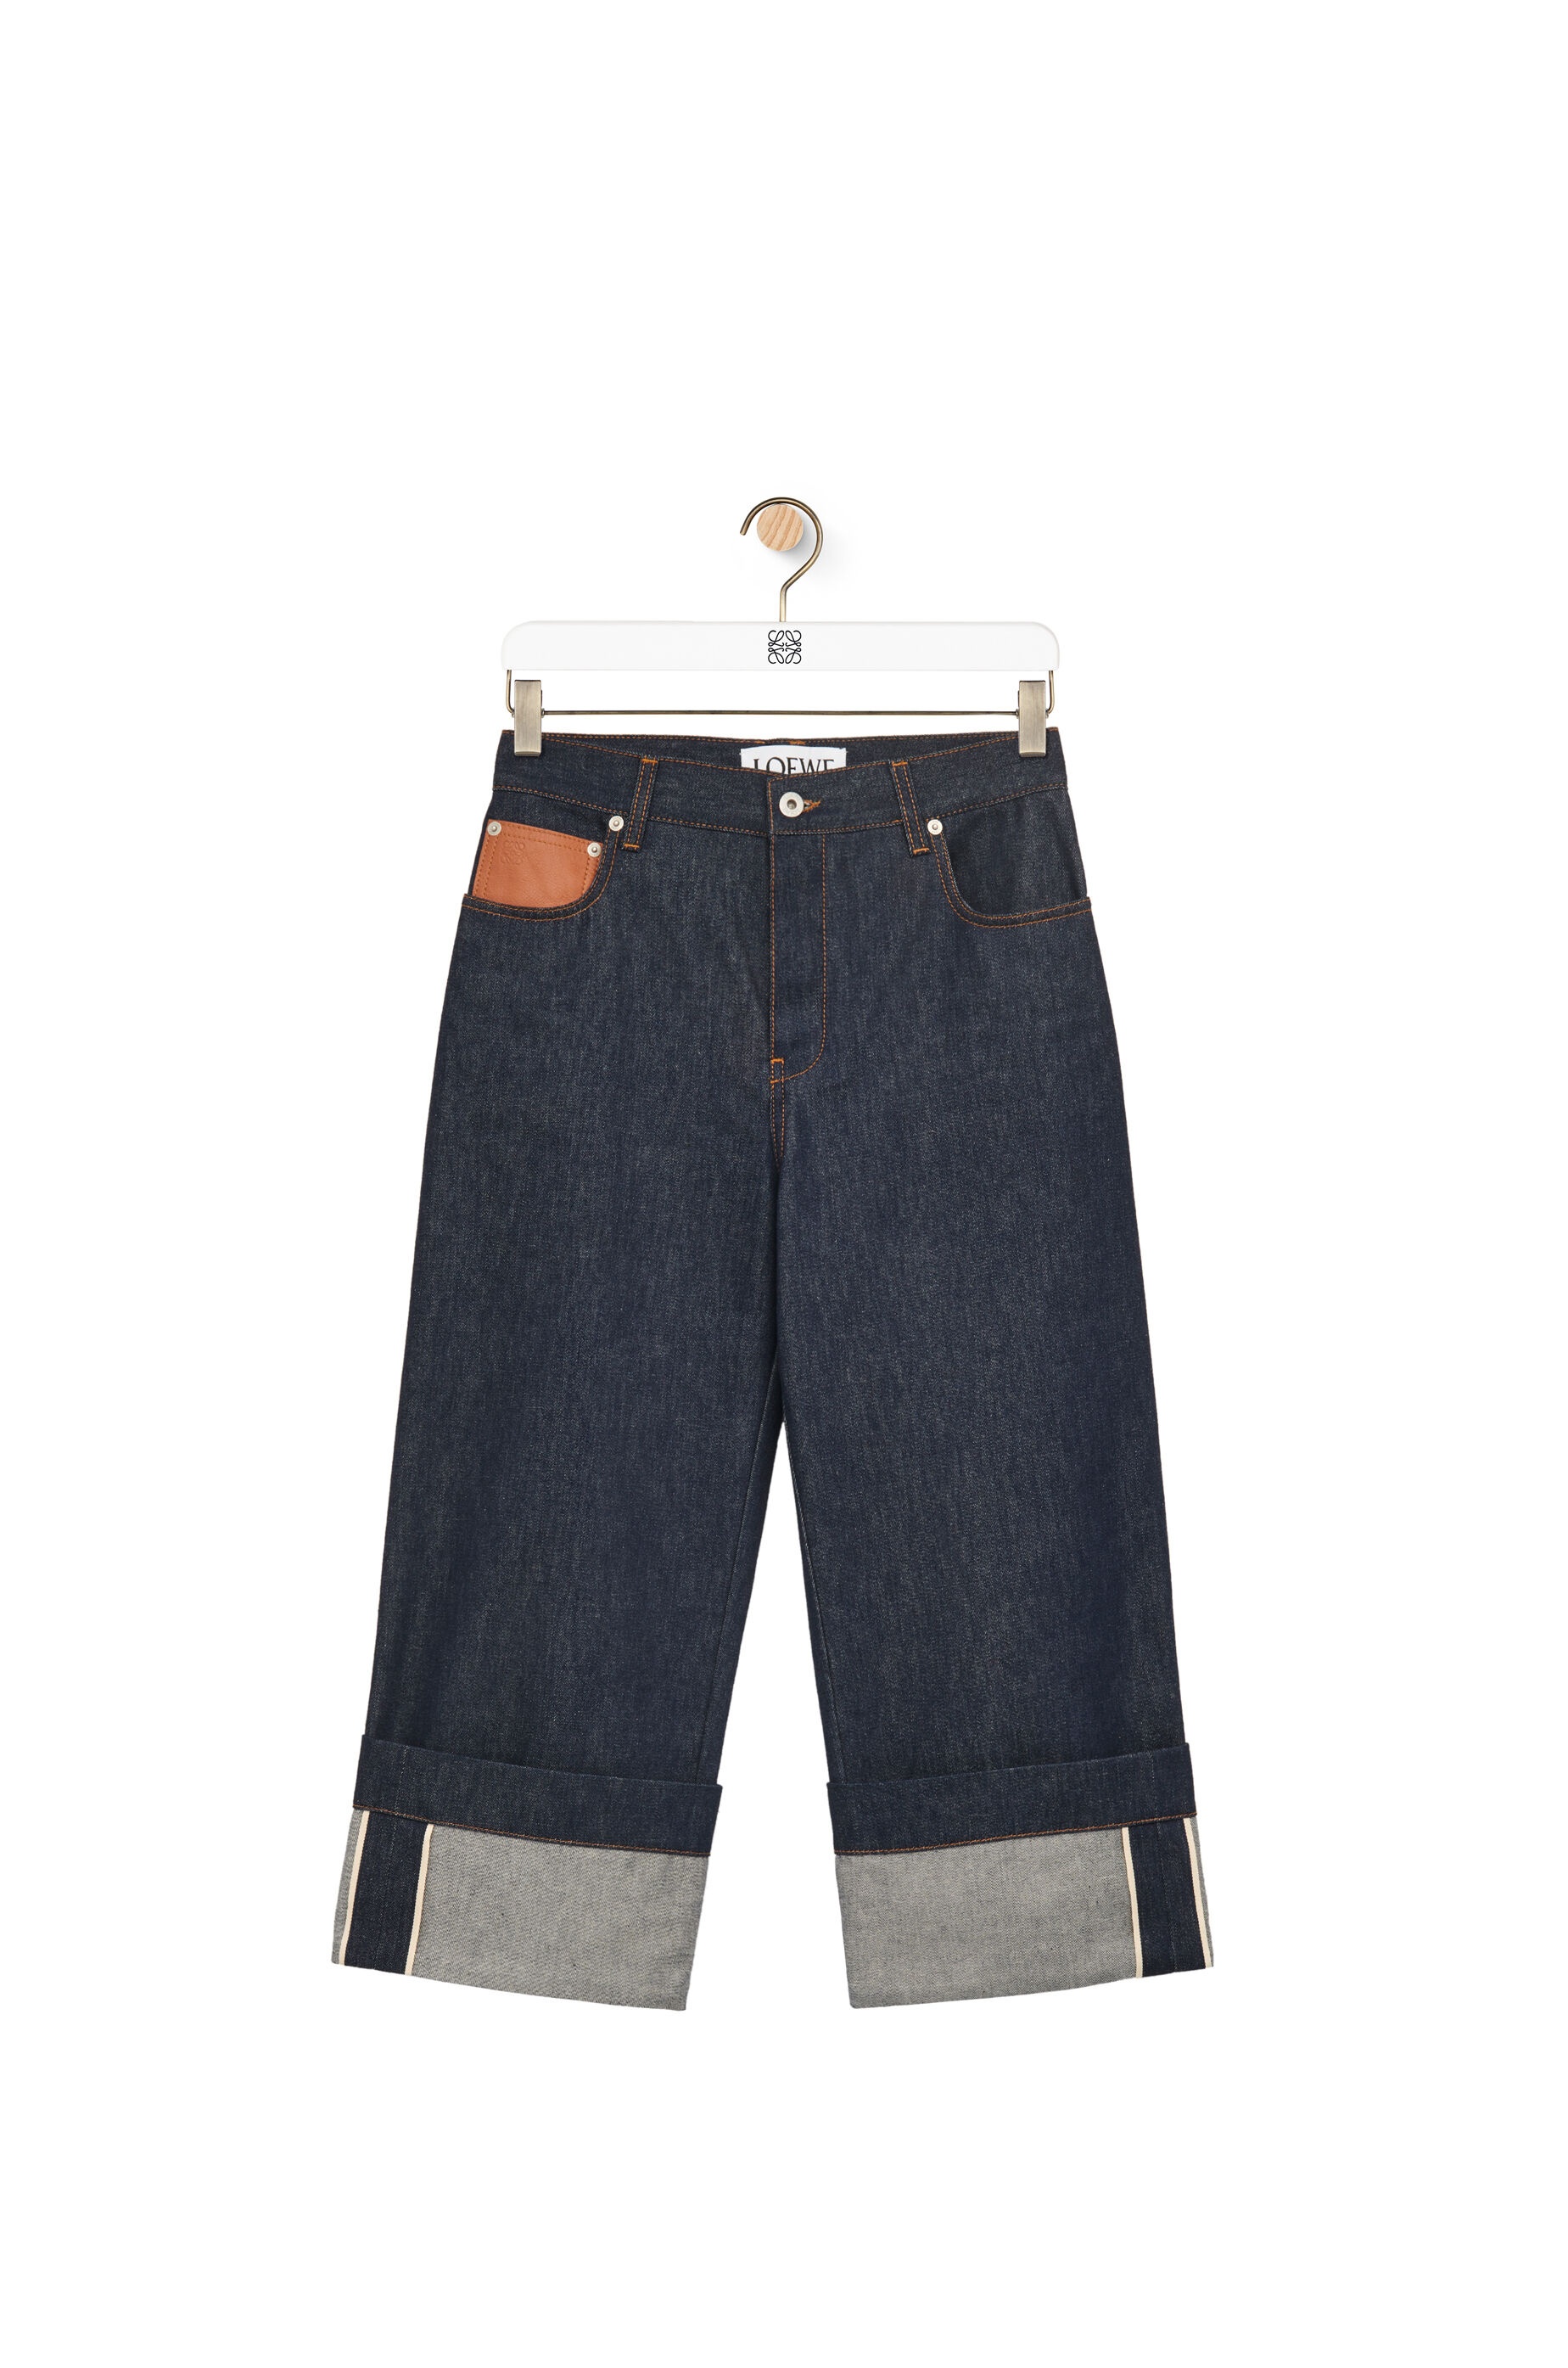 Loewe Fisherman turn-up jeans in denim | REVERSIBLE